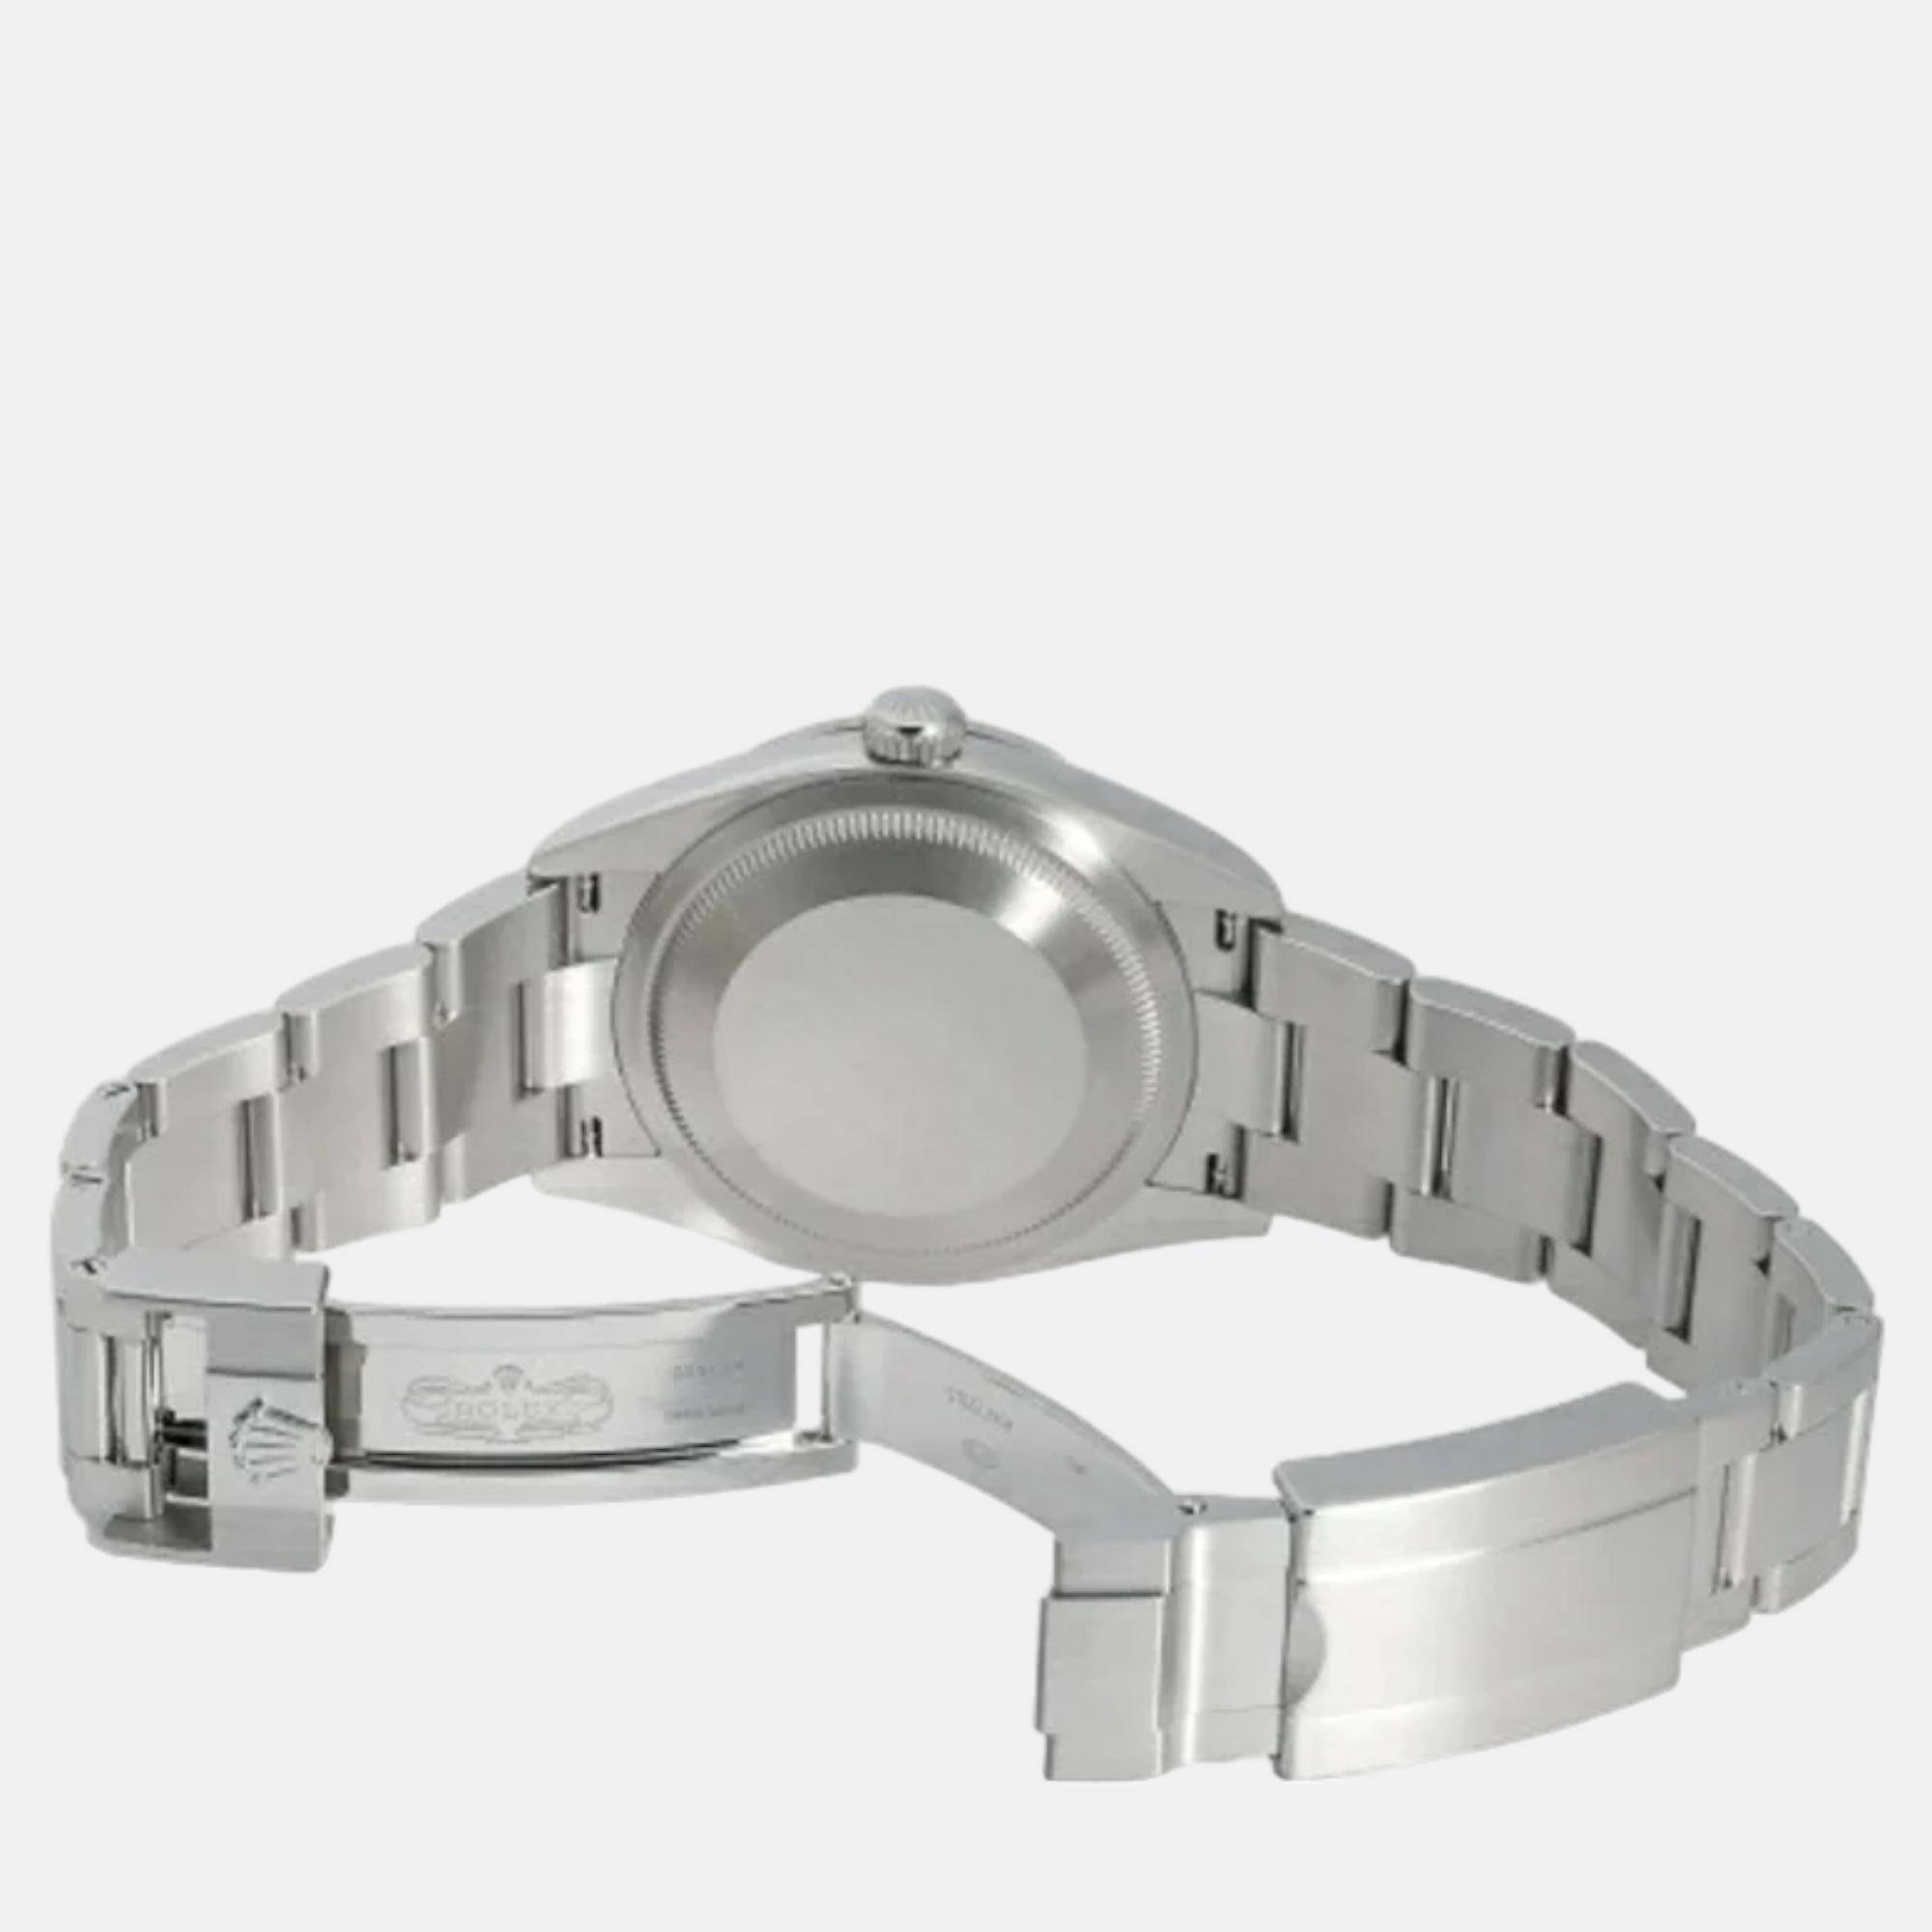 Rolex Black Stainless Steel Explorer 124270 Automatic Men's Wristwatch 36 Mm